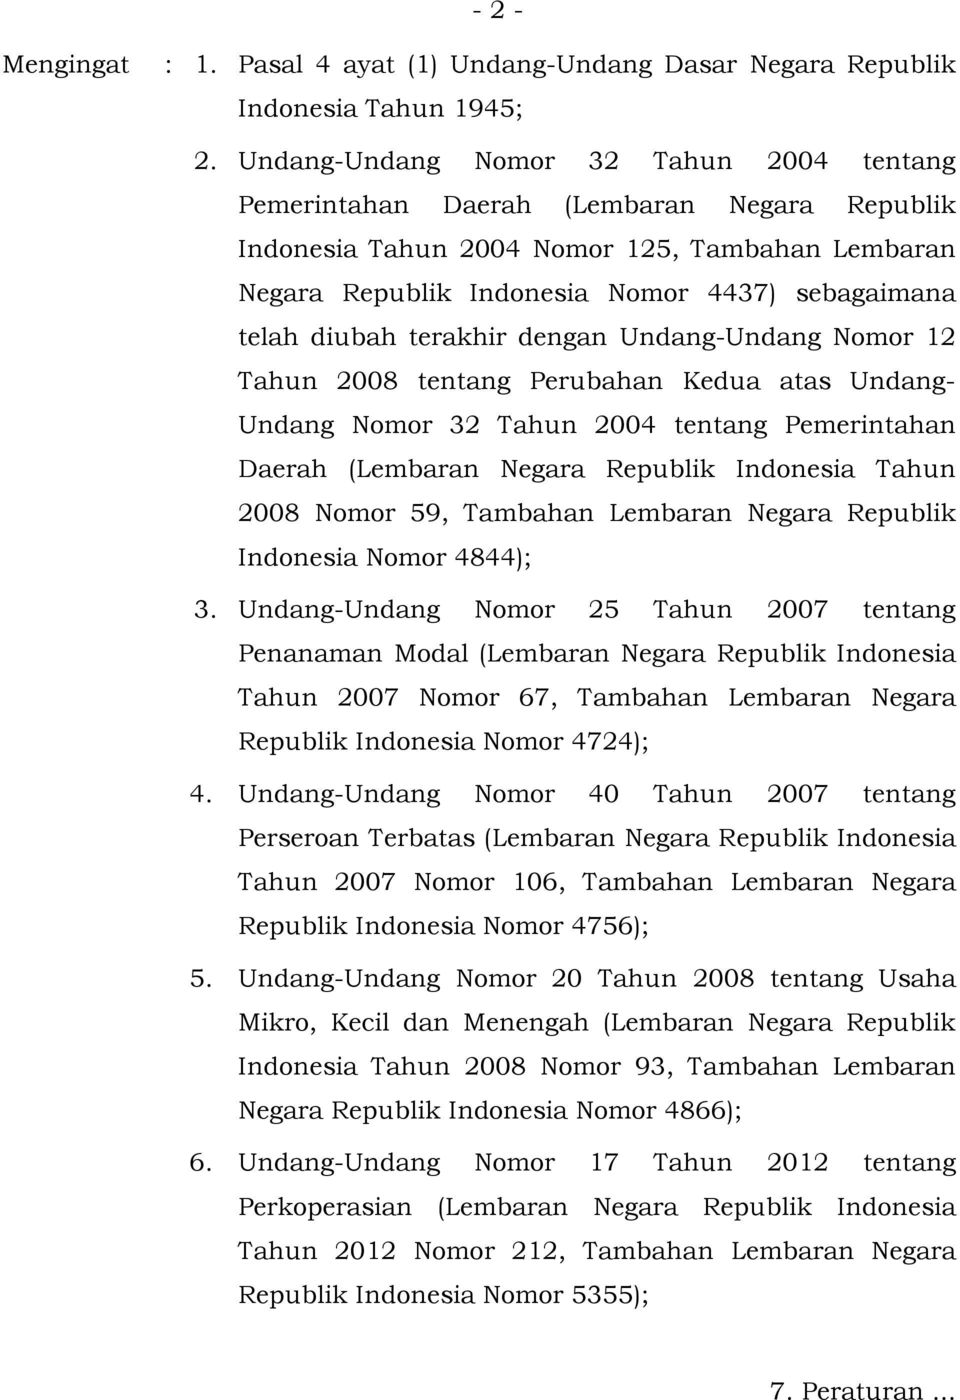 terakhir dengan UndangUndang Nomor 12 Tahun 2008 tentang Perubahan Kedua atas Undang Undang Nomor 32 Tahun 2004 tentang Pemerintahan Daerah (Lembaran Negara Republik Indonesia Tahun 2008 Nomor 59,